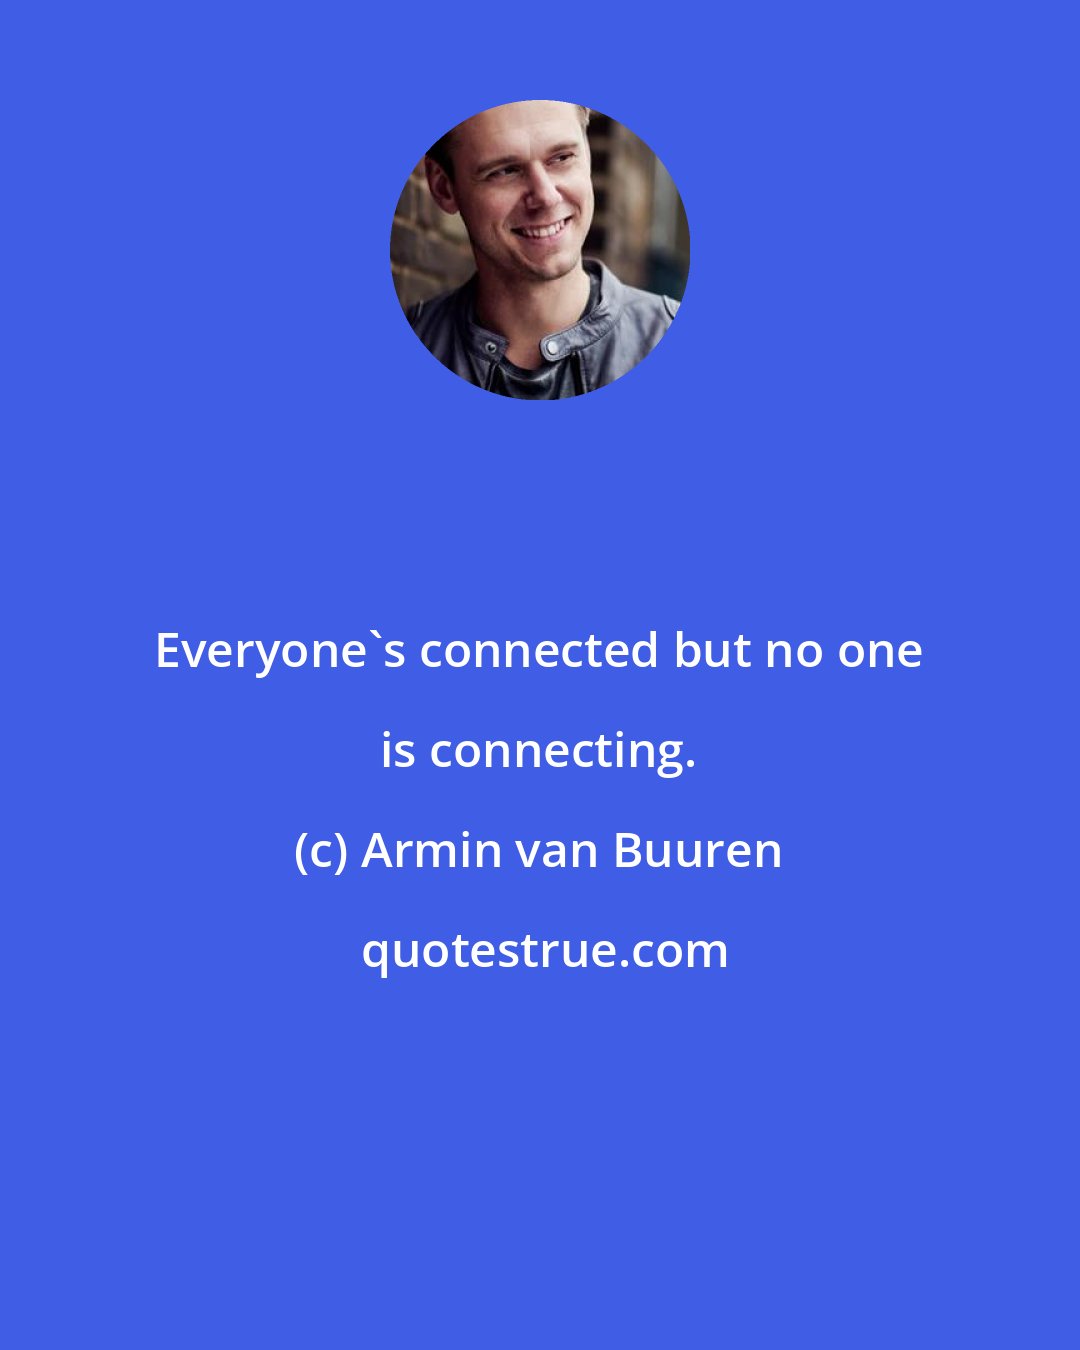 Armin van Buuren: Everyone's connected but no one is connecting.